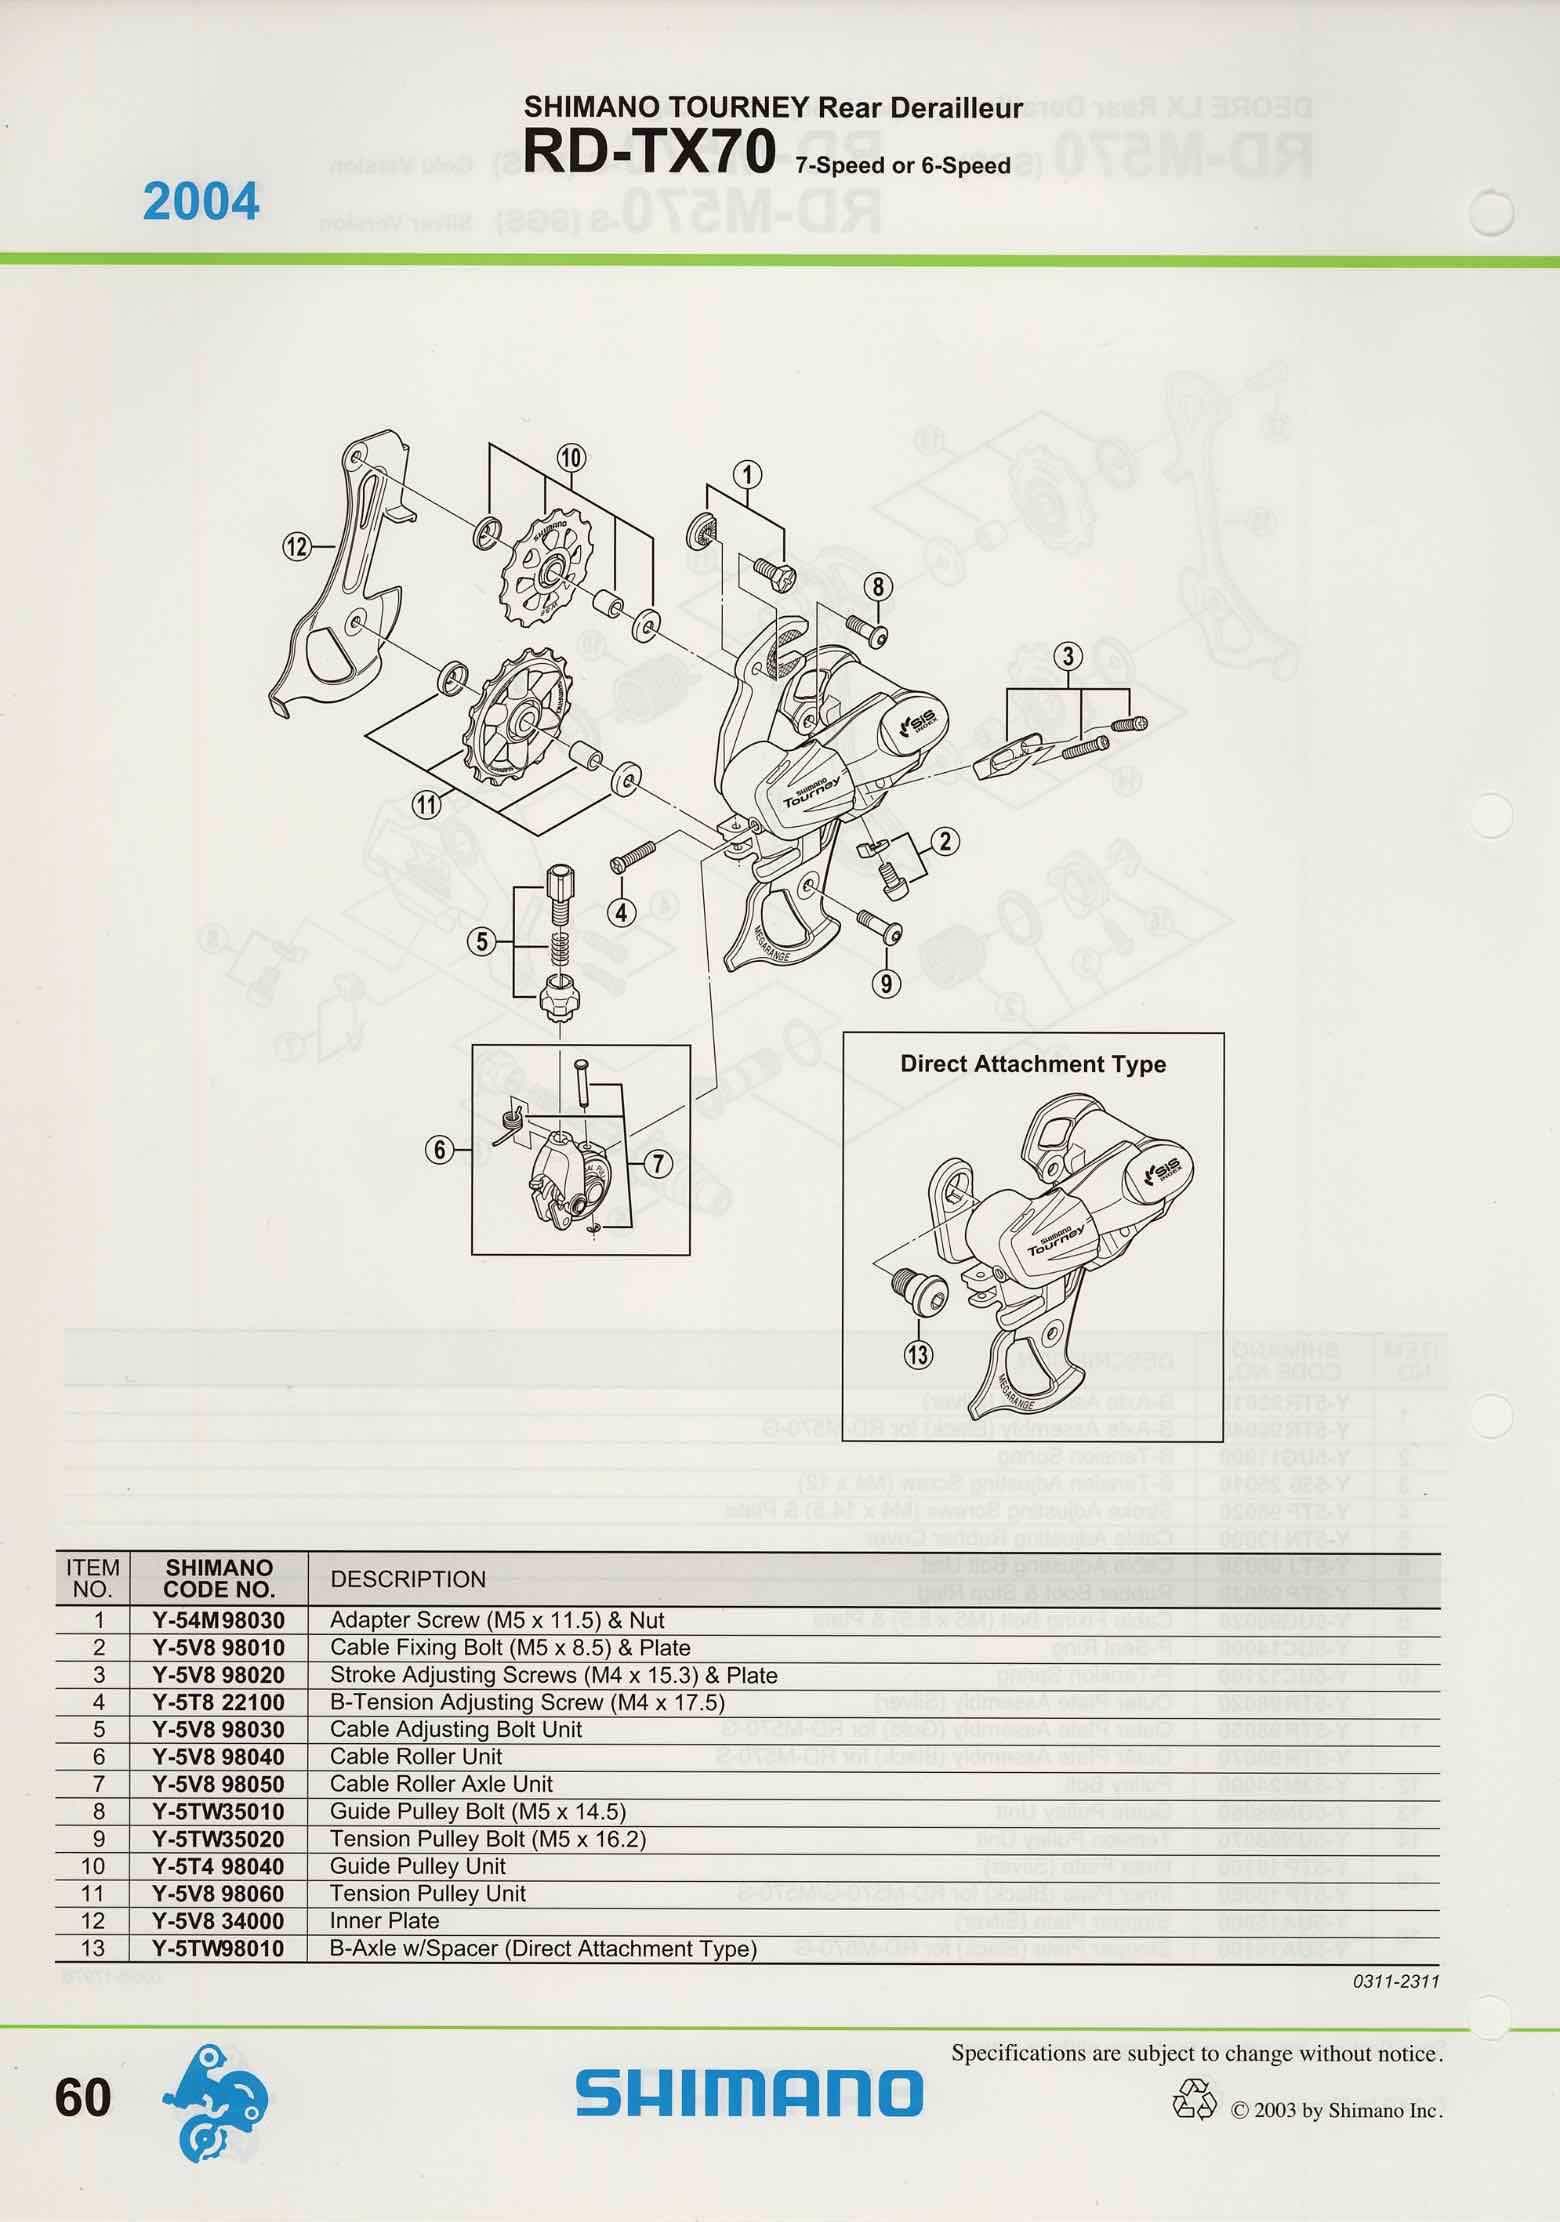 Shimano Spare Parts Catalogue - 1994 to 2004 s5 p60 main image